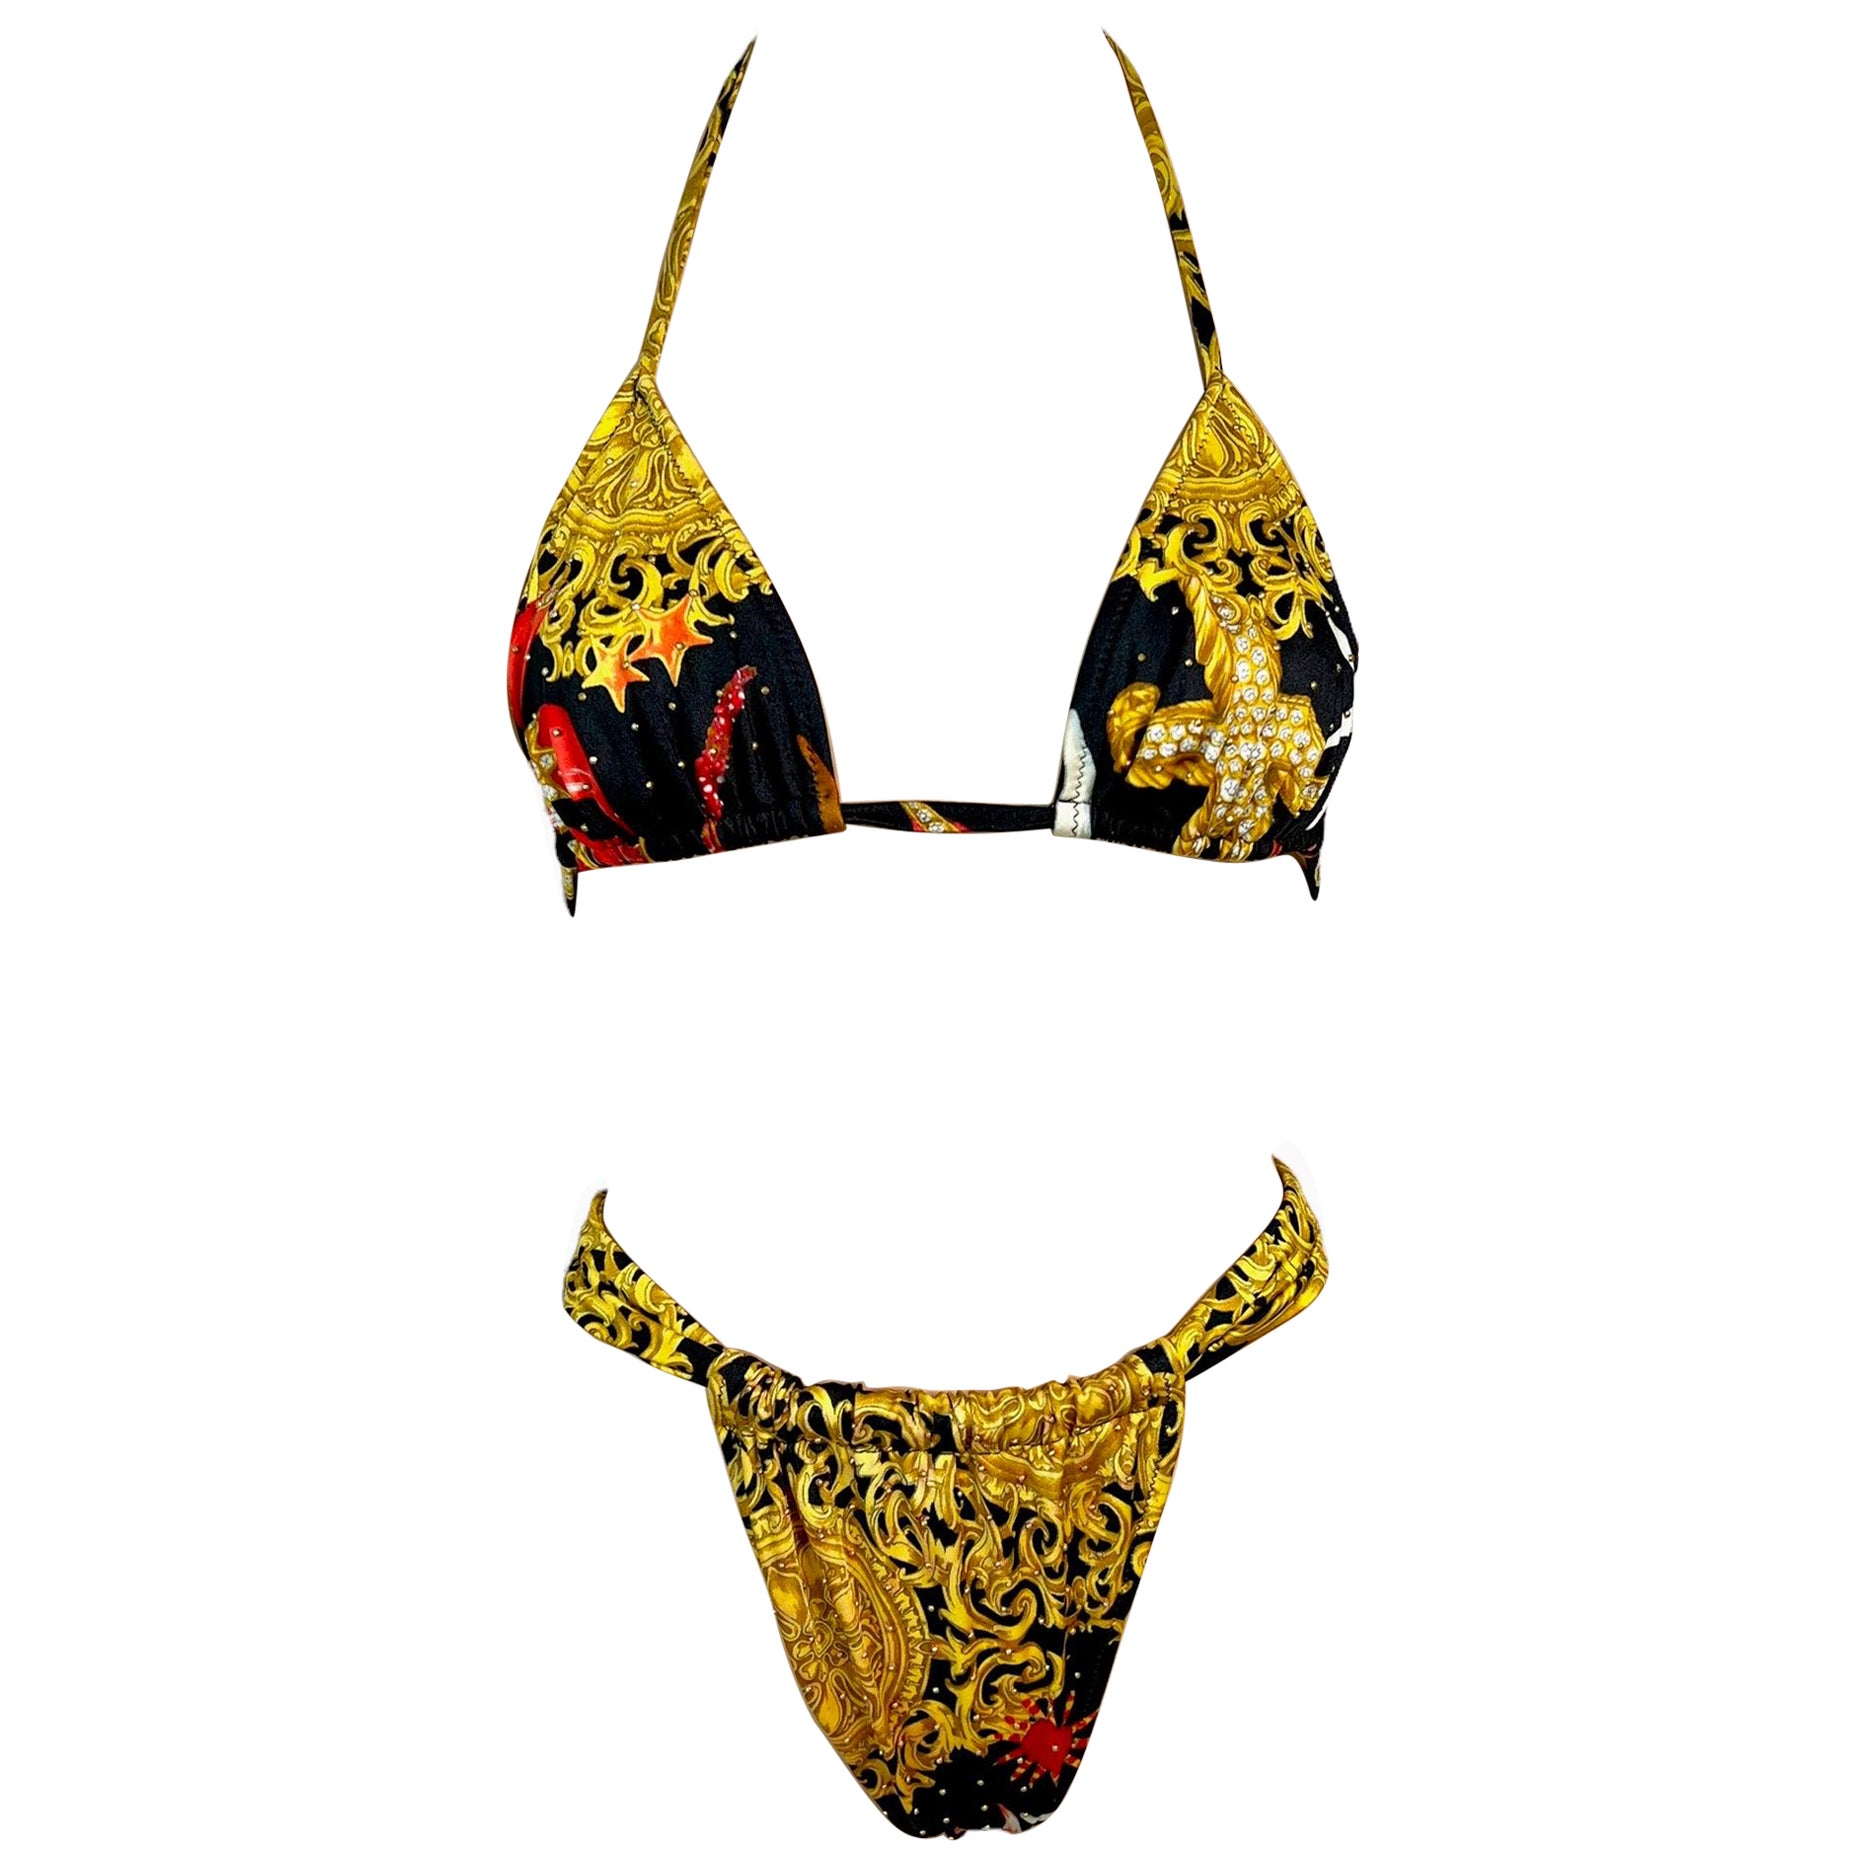 Gianni Versace S/S 1992 Baroque Embellished Two-Piece Bikini Swimsuit Swimwear For Sale